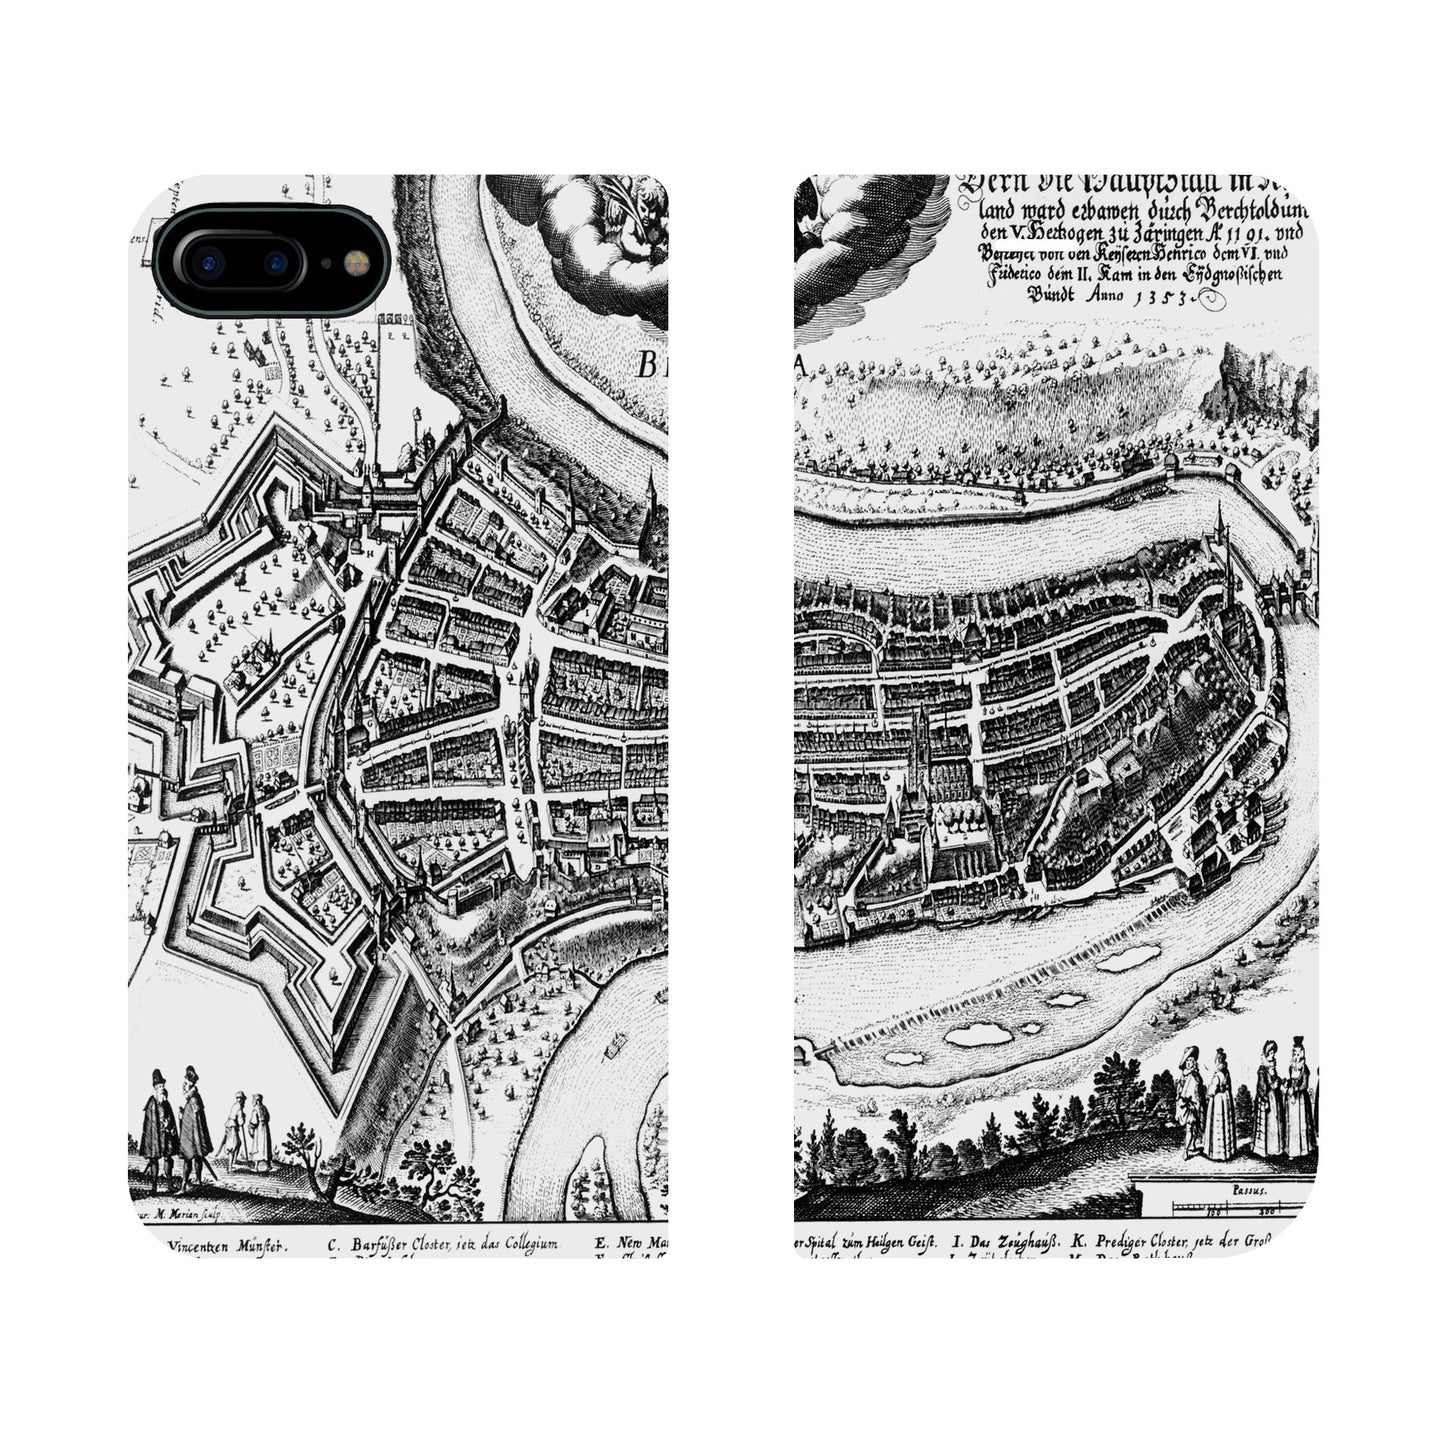 Bern Merian Panorama Case for iPhone 6/6S/7/8 Plus